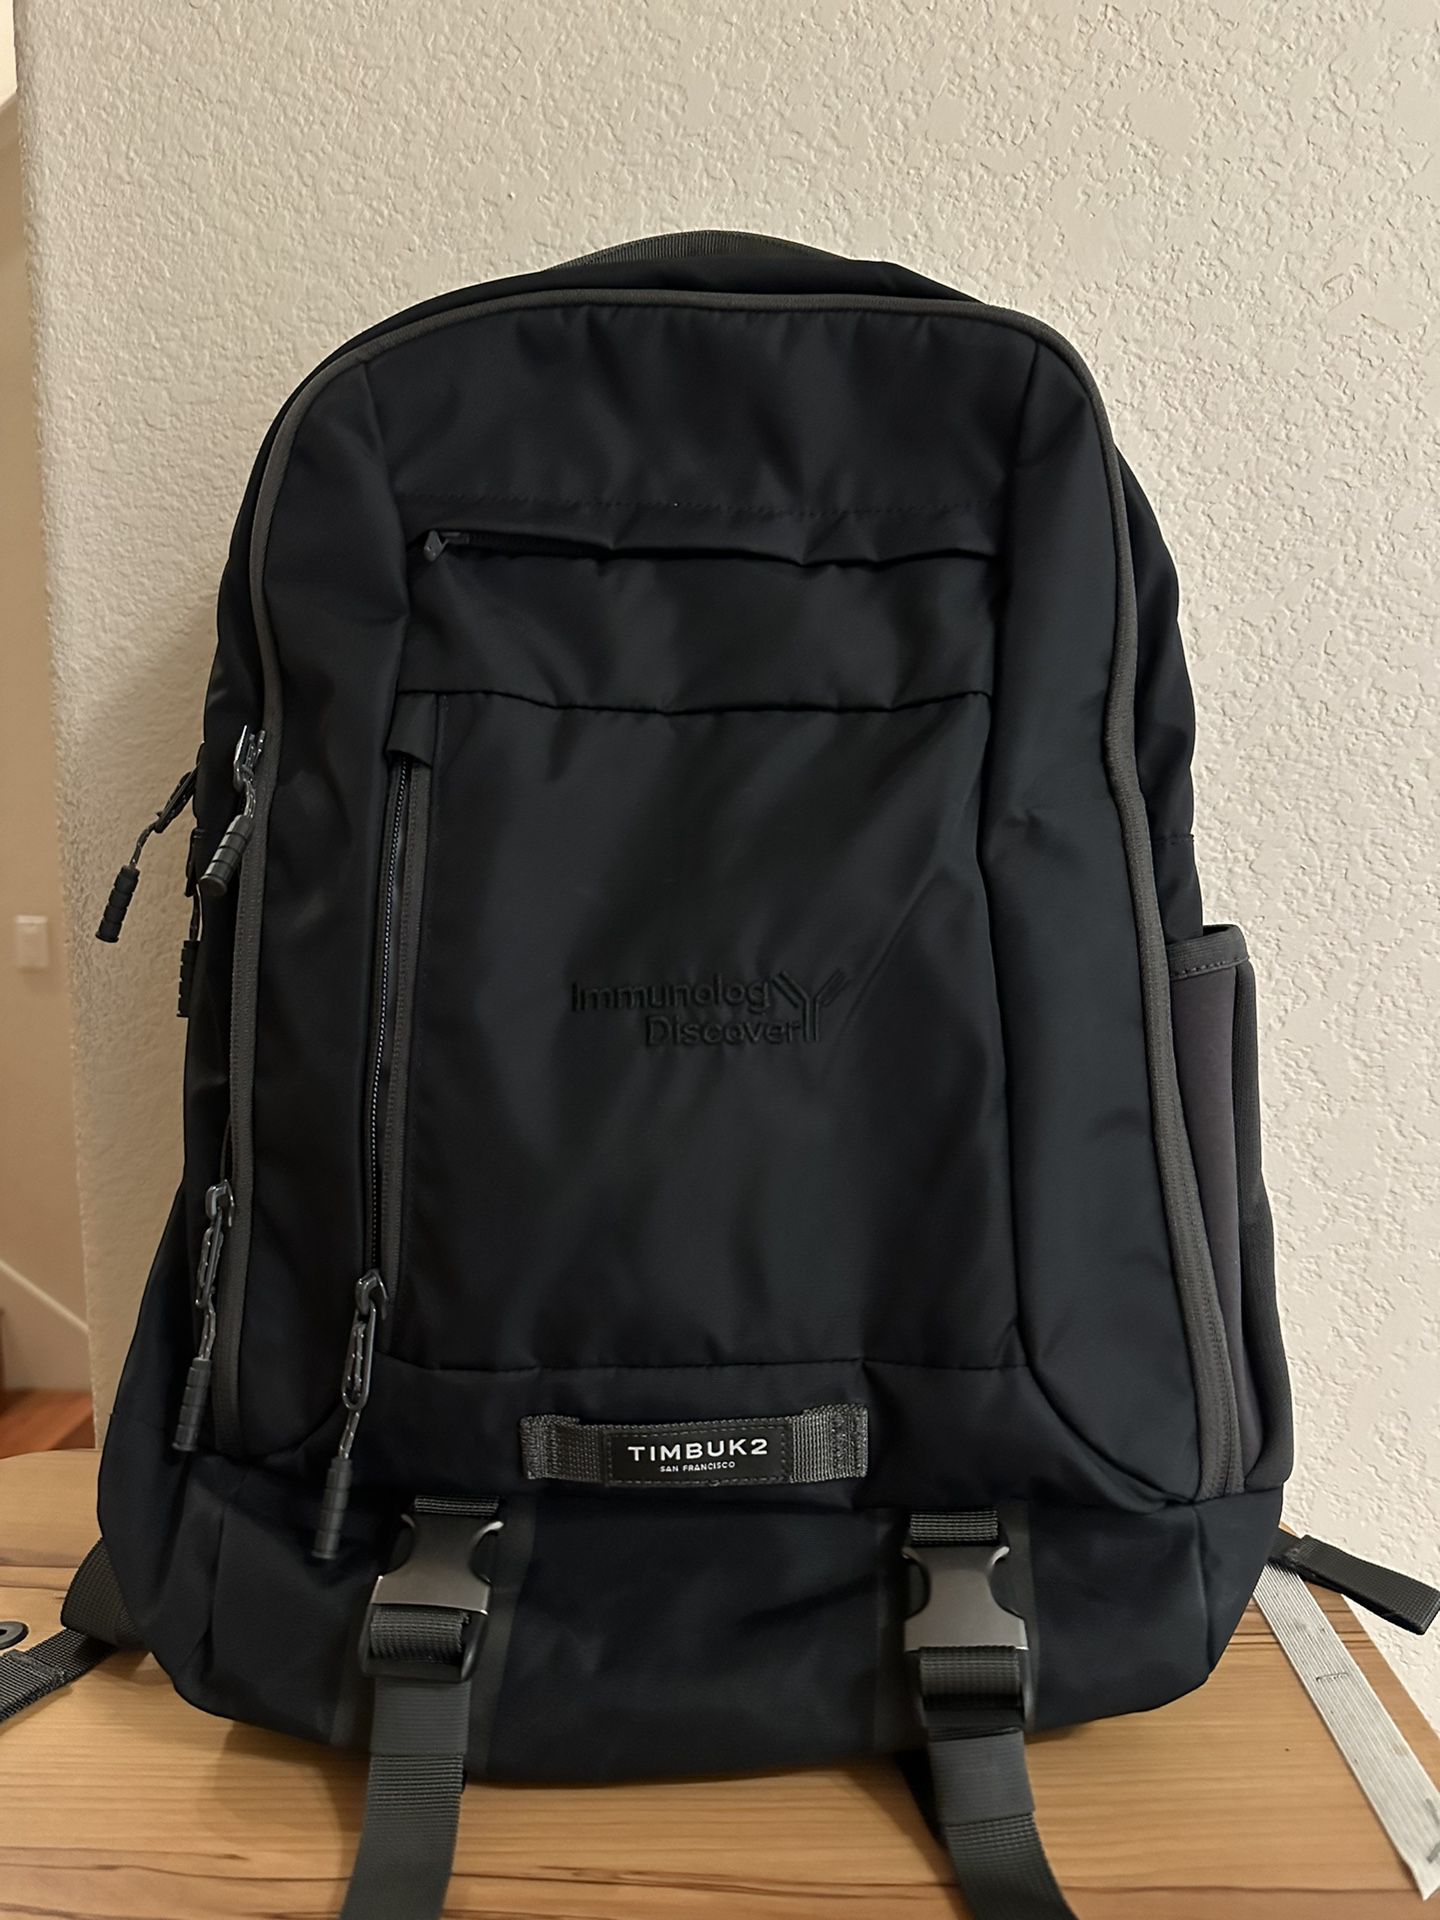 [New] TIMBUK2 Commute Backpack